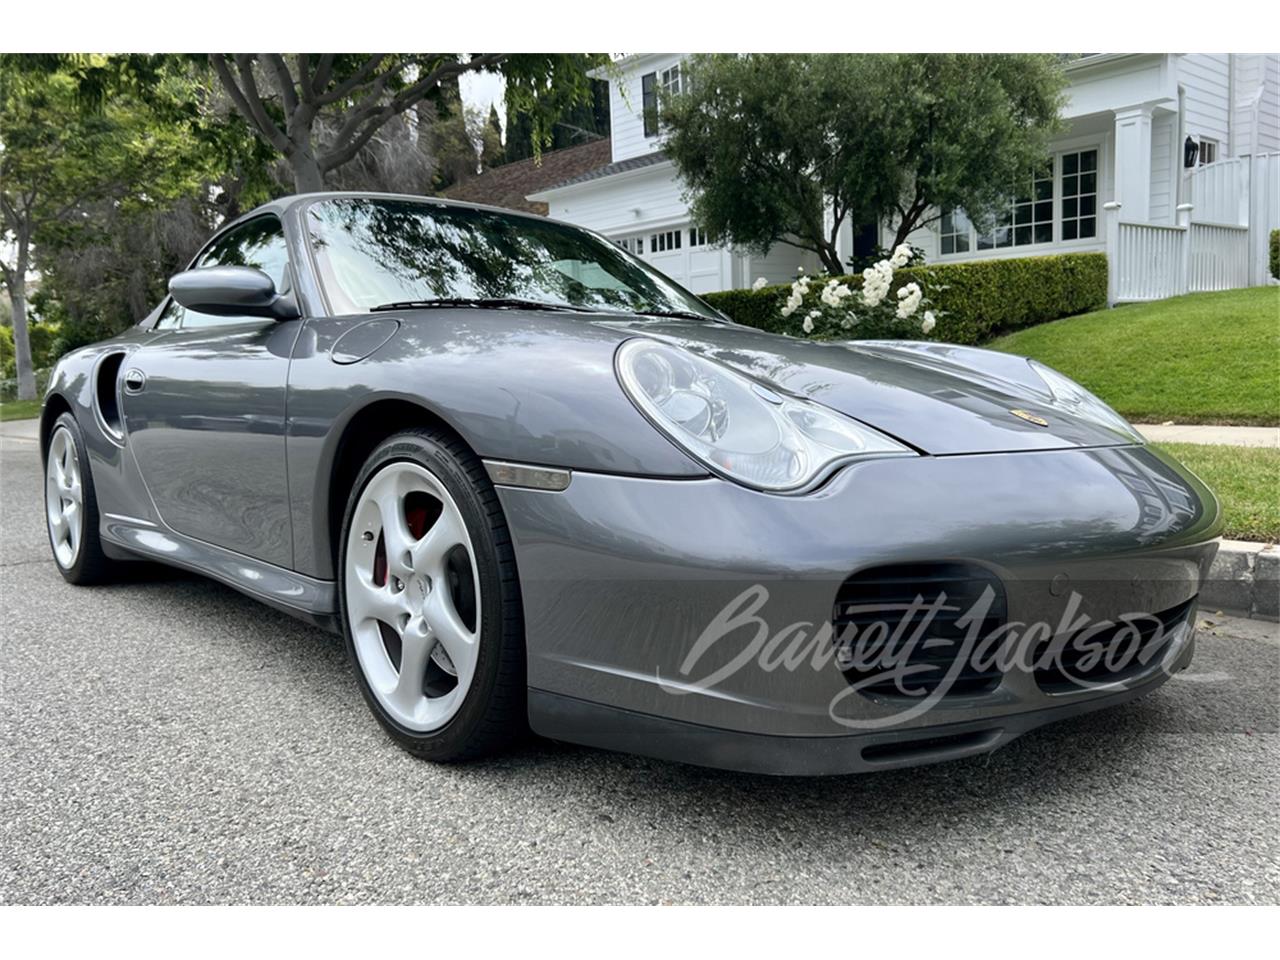 For Sale at Auction: 2004 Porsche 911 in Las Vegas, Nevada